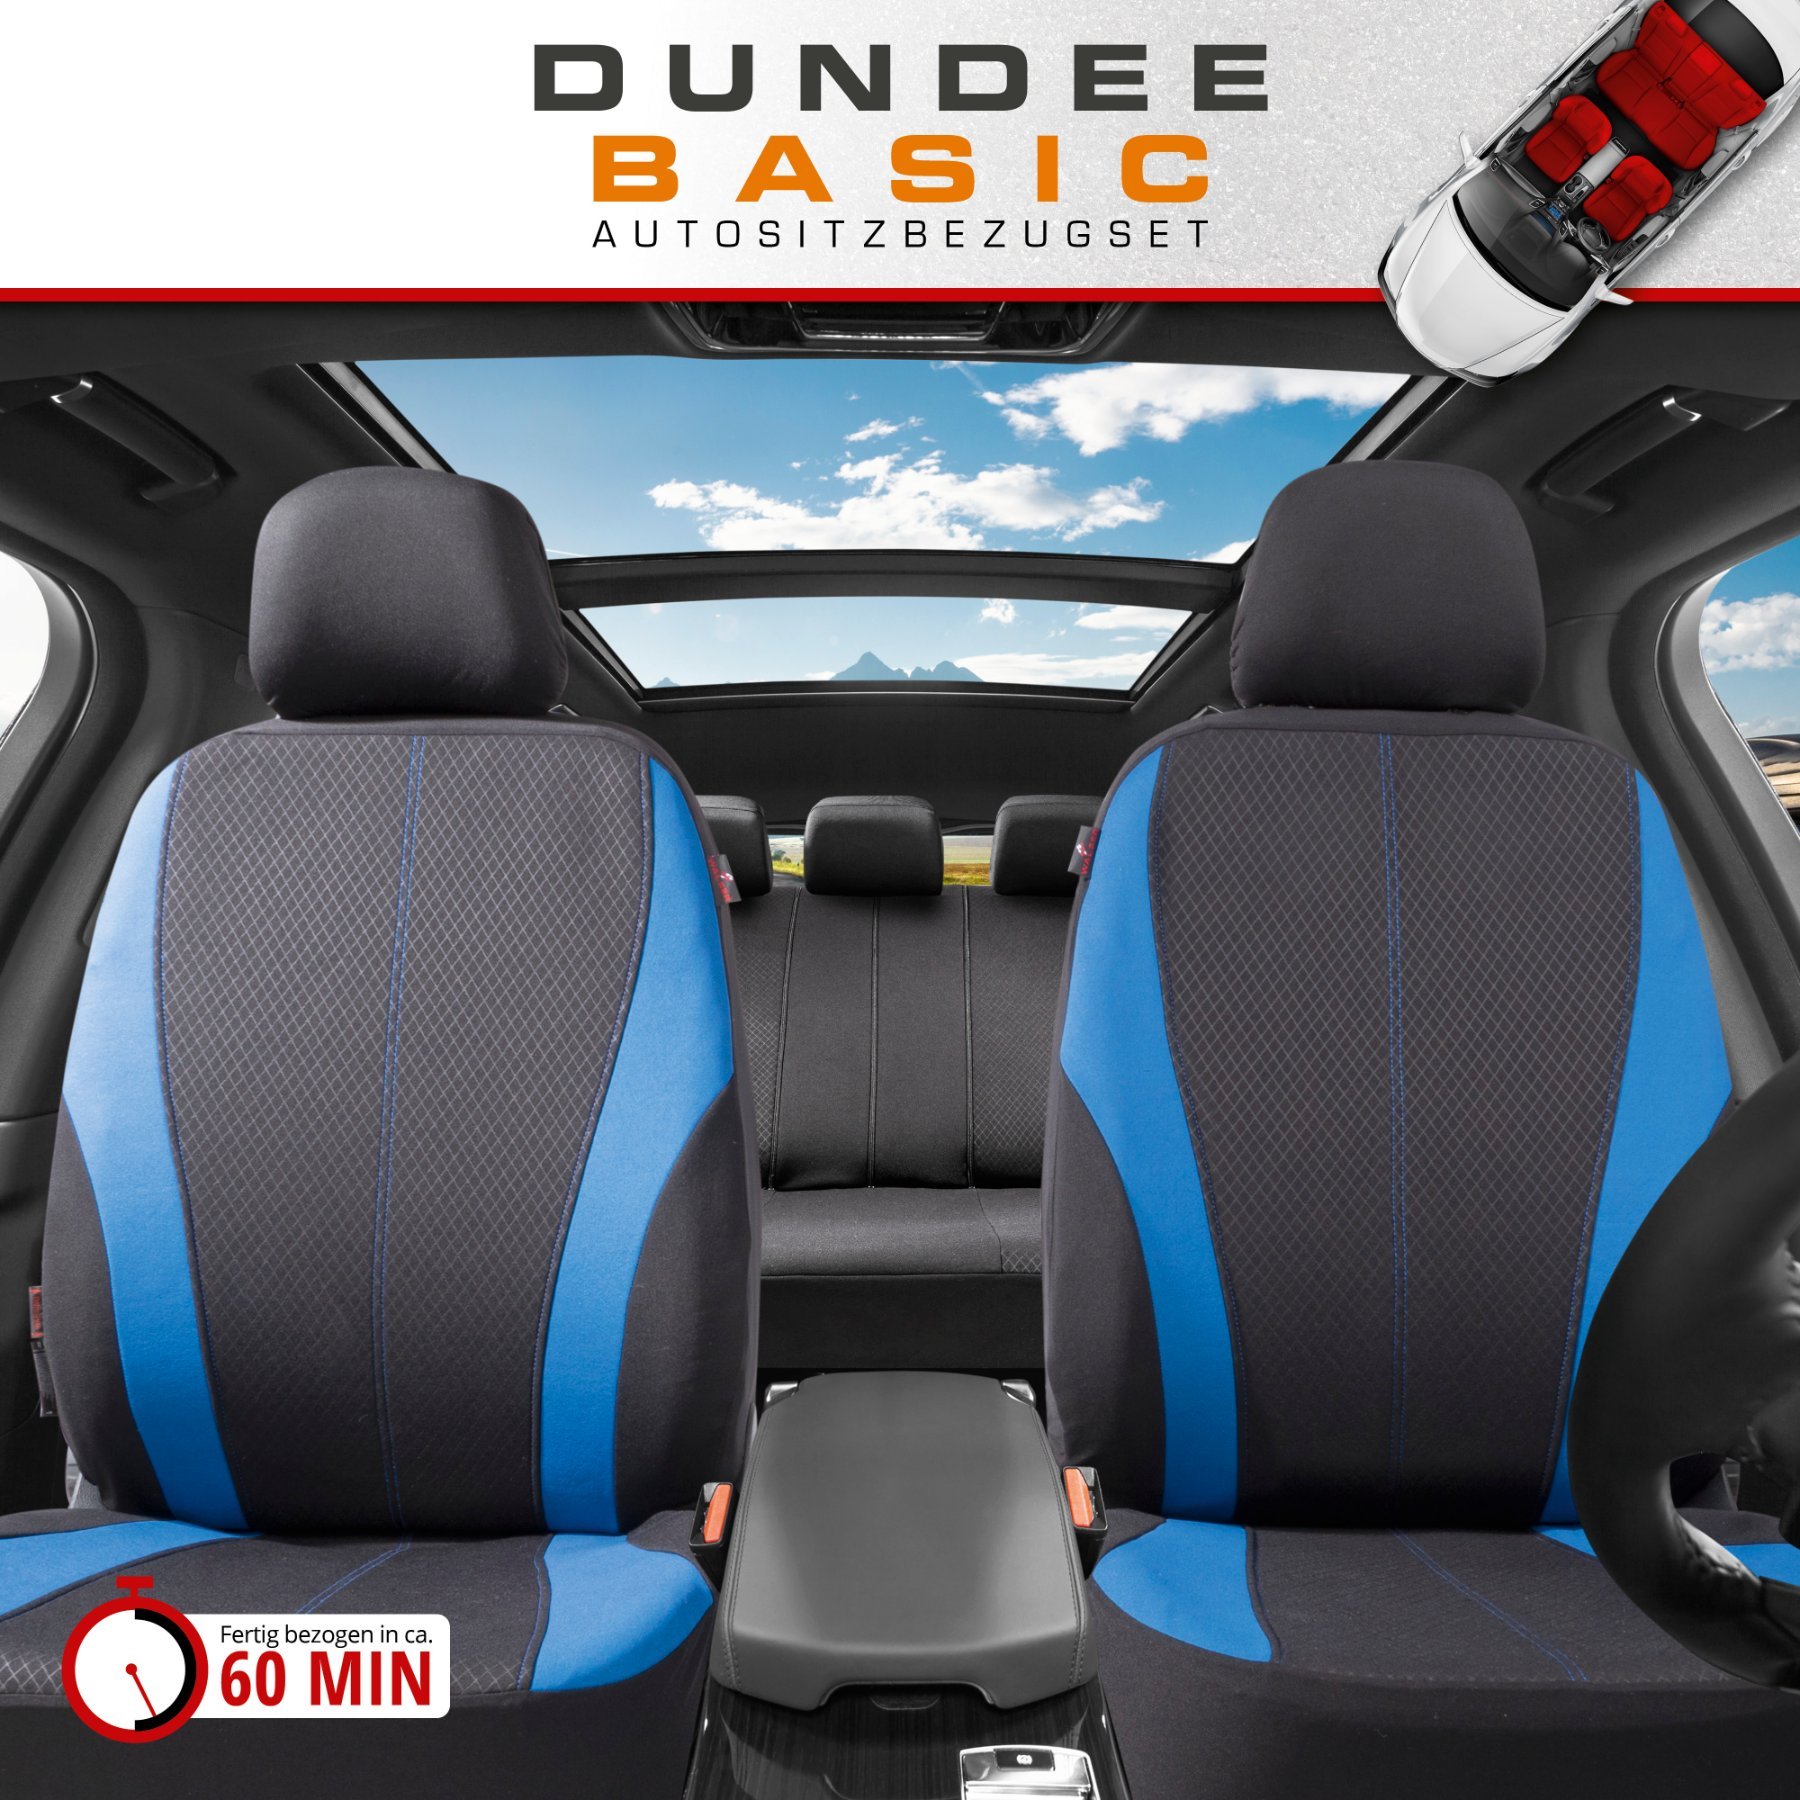 ZIPP IT Autositzbezüge Dundee Komplettset mit Reißverschluss-System schwarz/blau